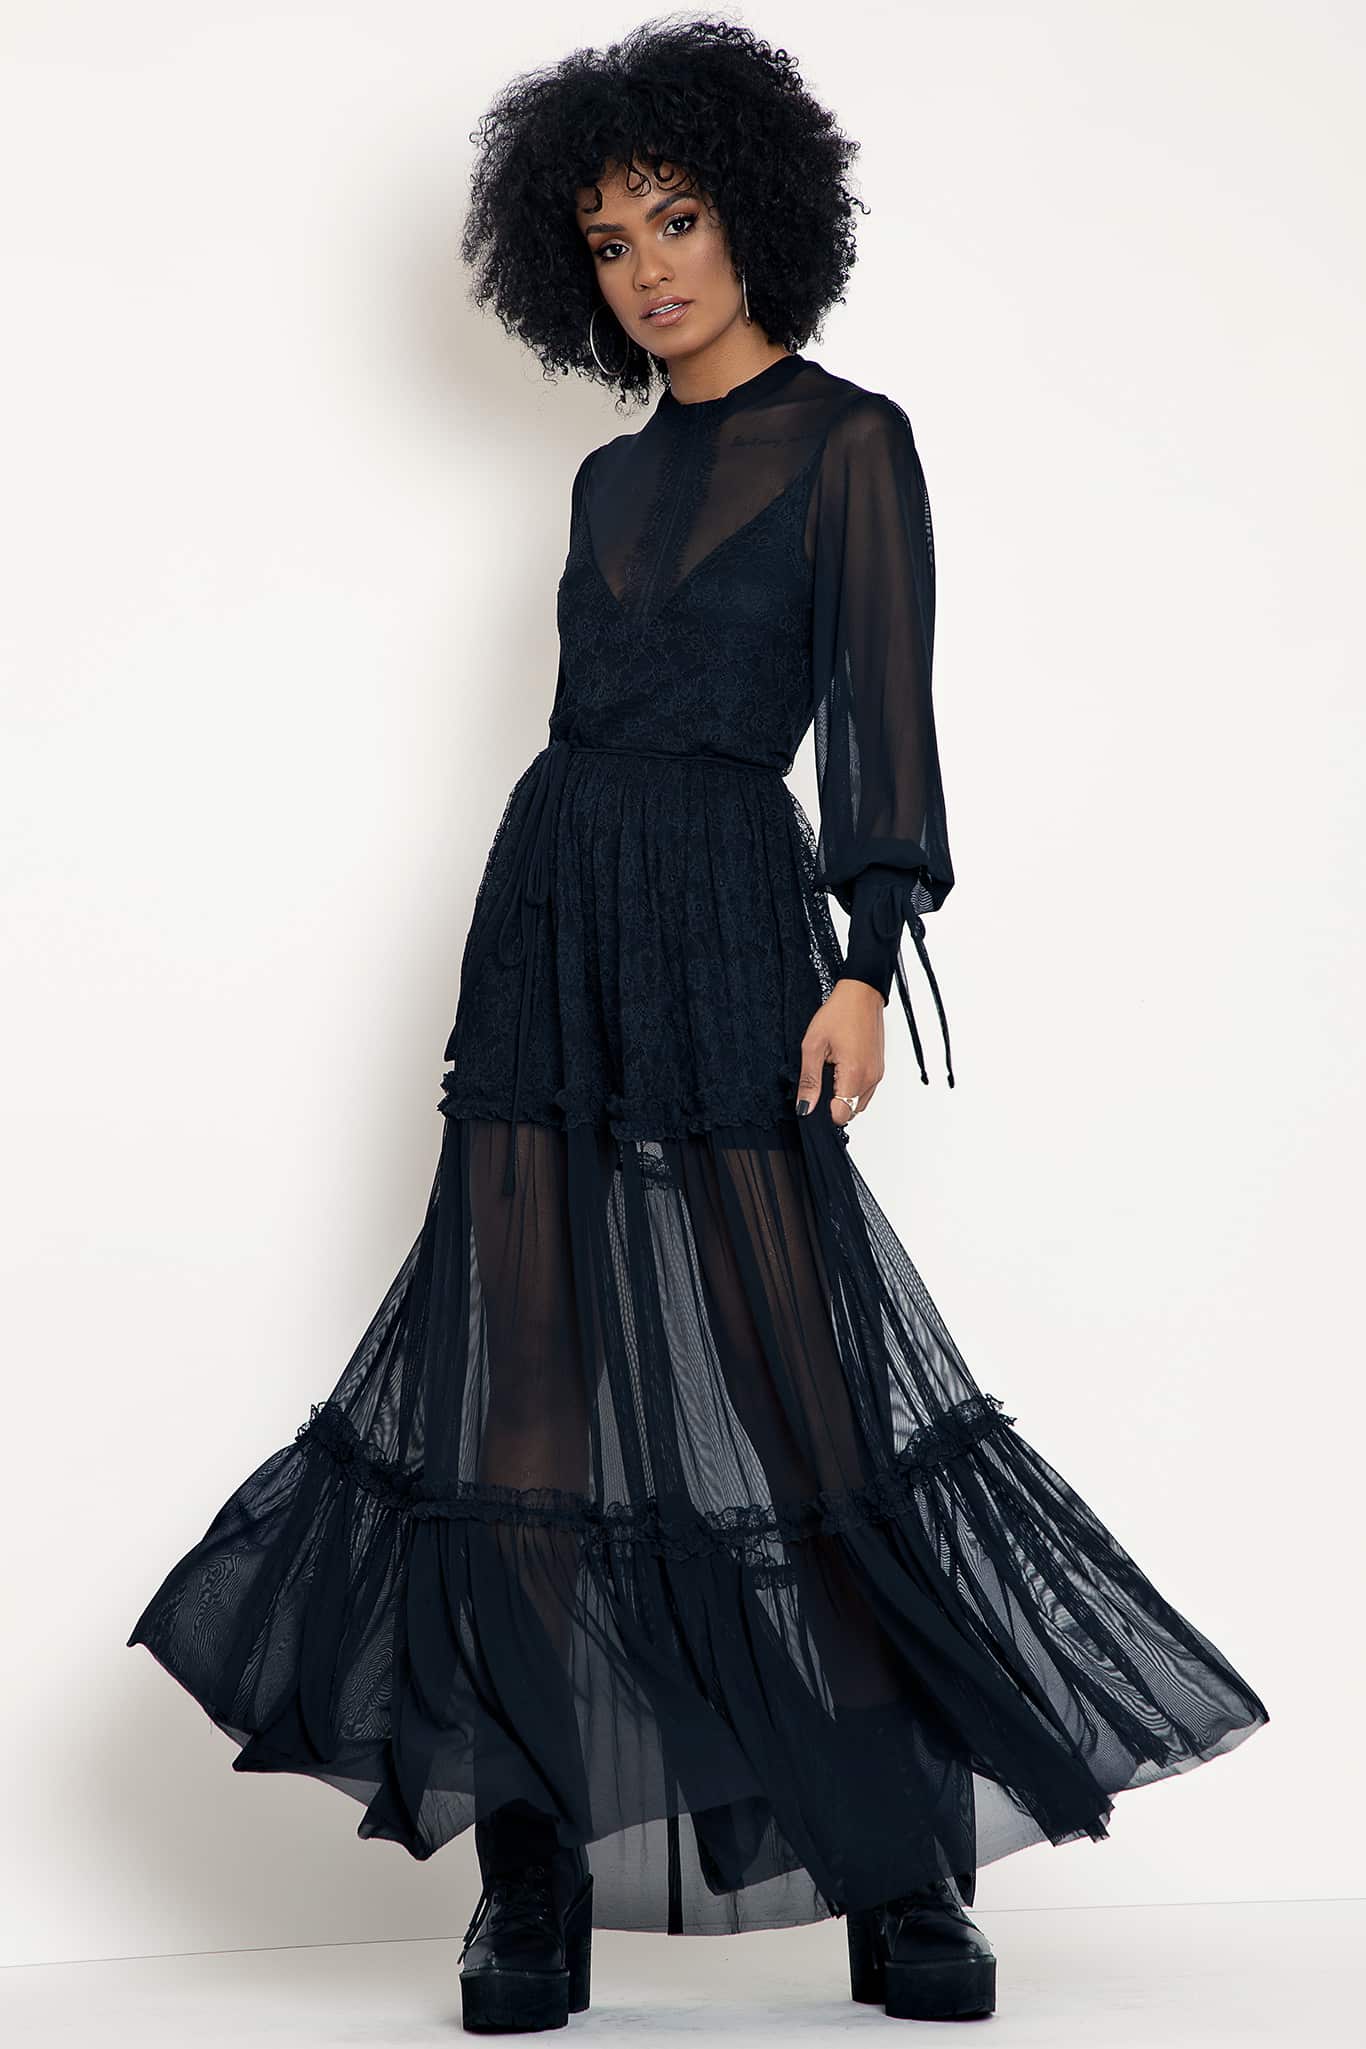 Emily Ratajkowski Wore Sheer Dress to New York Fashion Week Party—See Pic |  Glamour